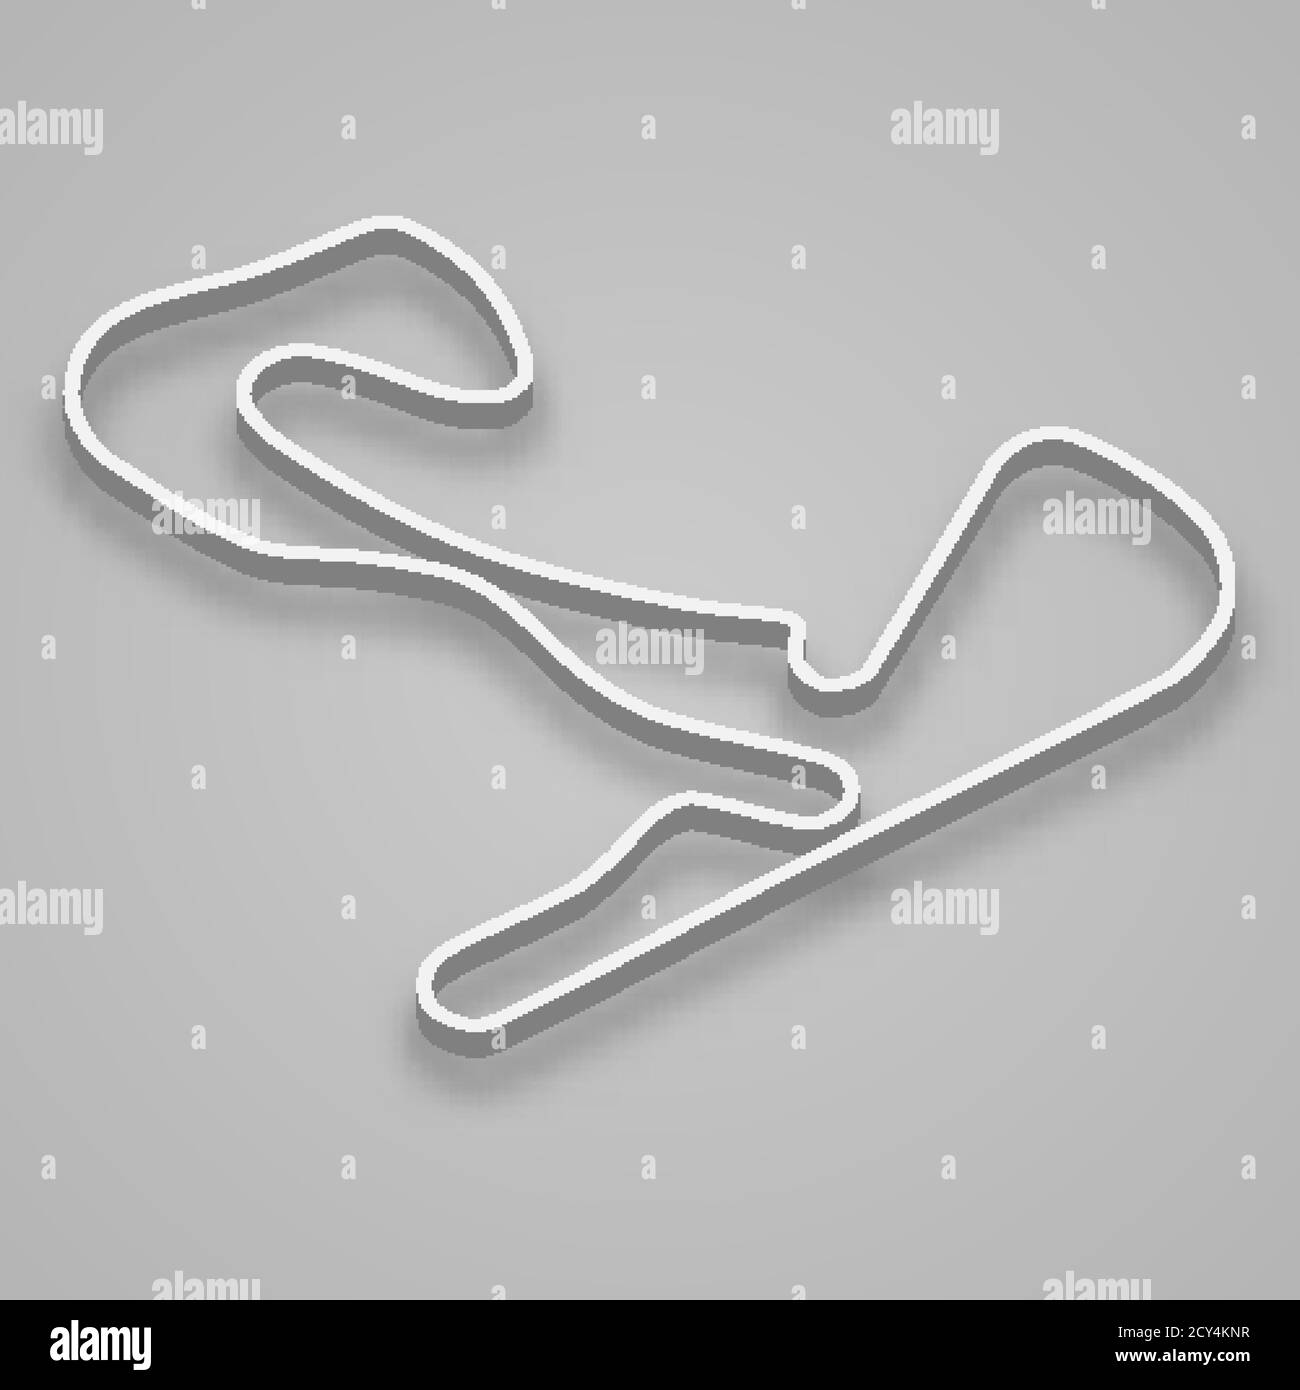 Zandvoort Circuit for motorsport and autosport. Netherlands Grand prix race track. Stock Vector